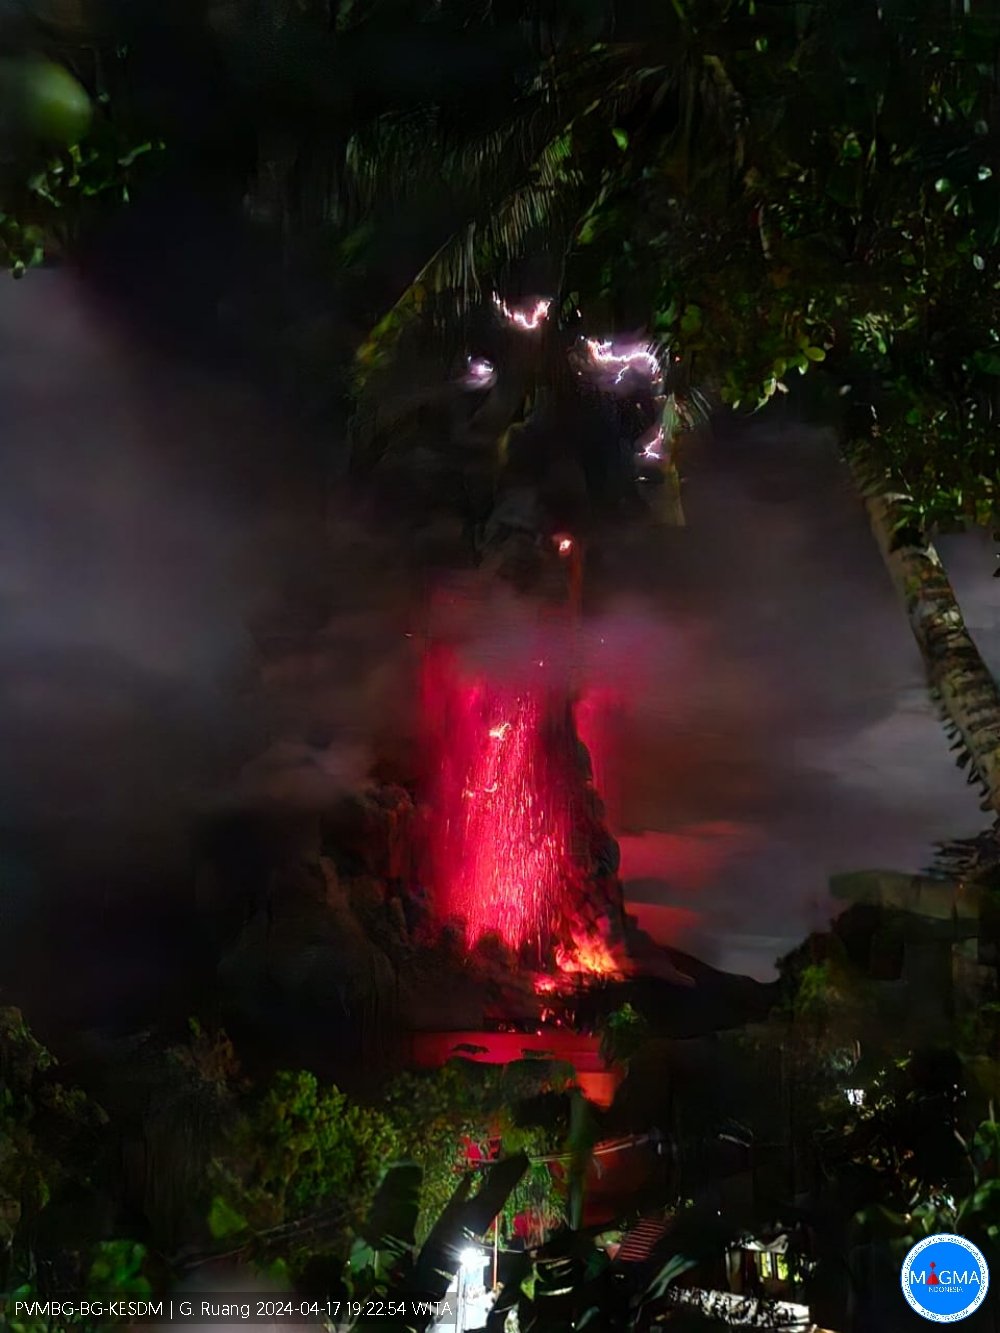 Stunning paroxysm eruptive episode at Ruang volcano tonight (image: PVMBG)